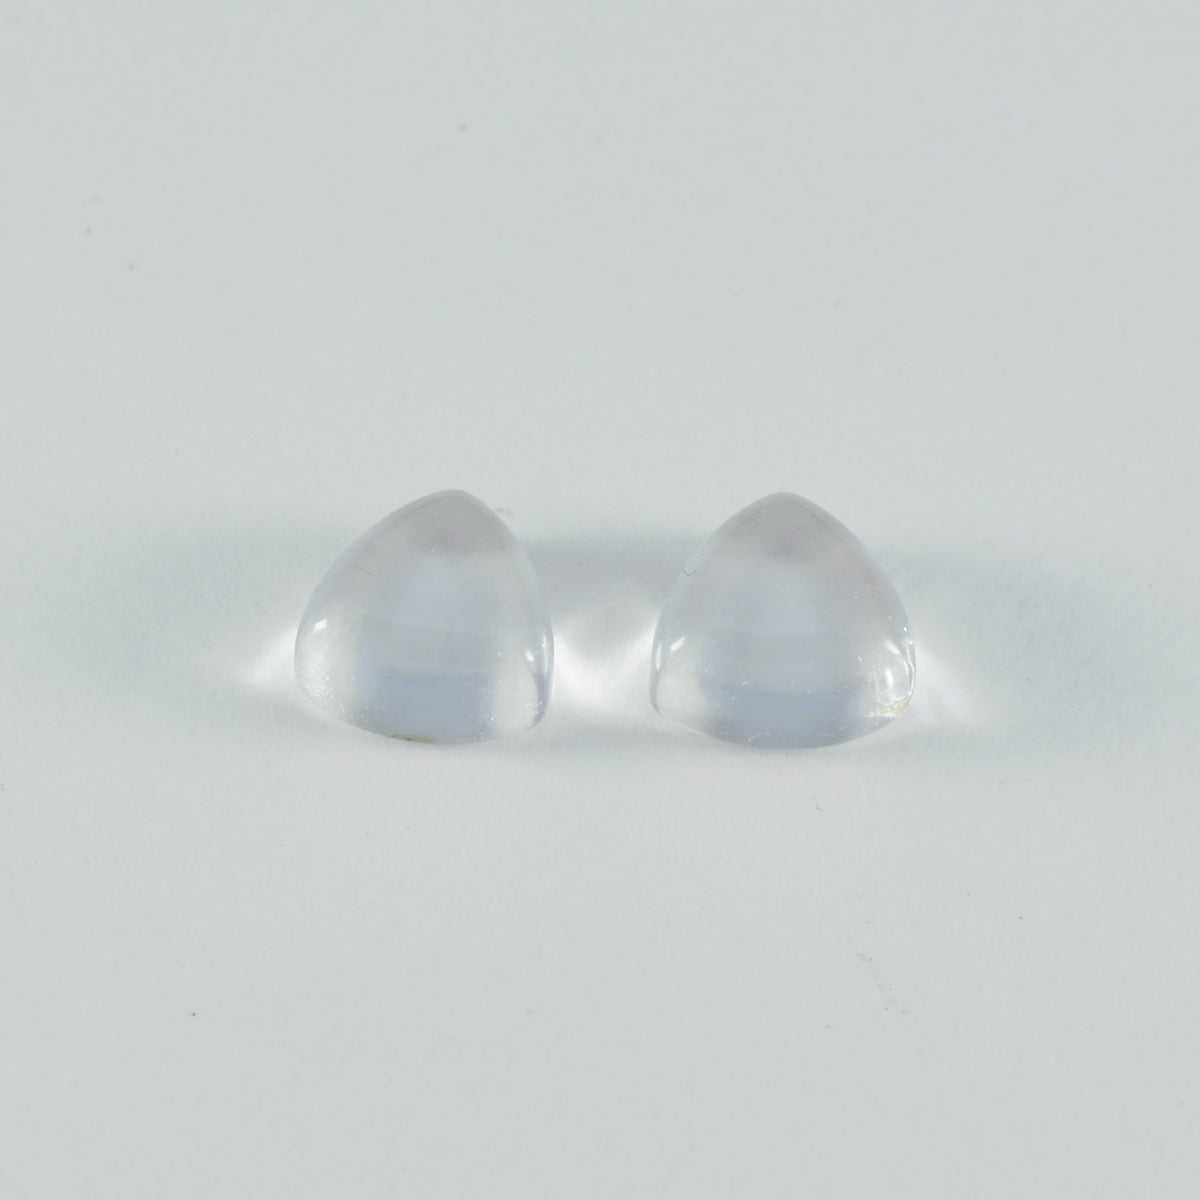 Riyogems 1PC White Crystal Quartz Cabochon 12x12 mm Trillion Shape beauty Quality Loose Stone